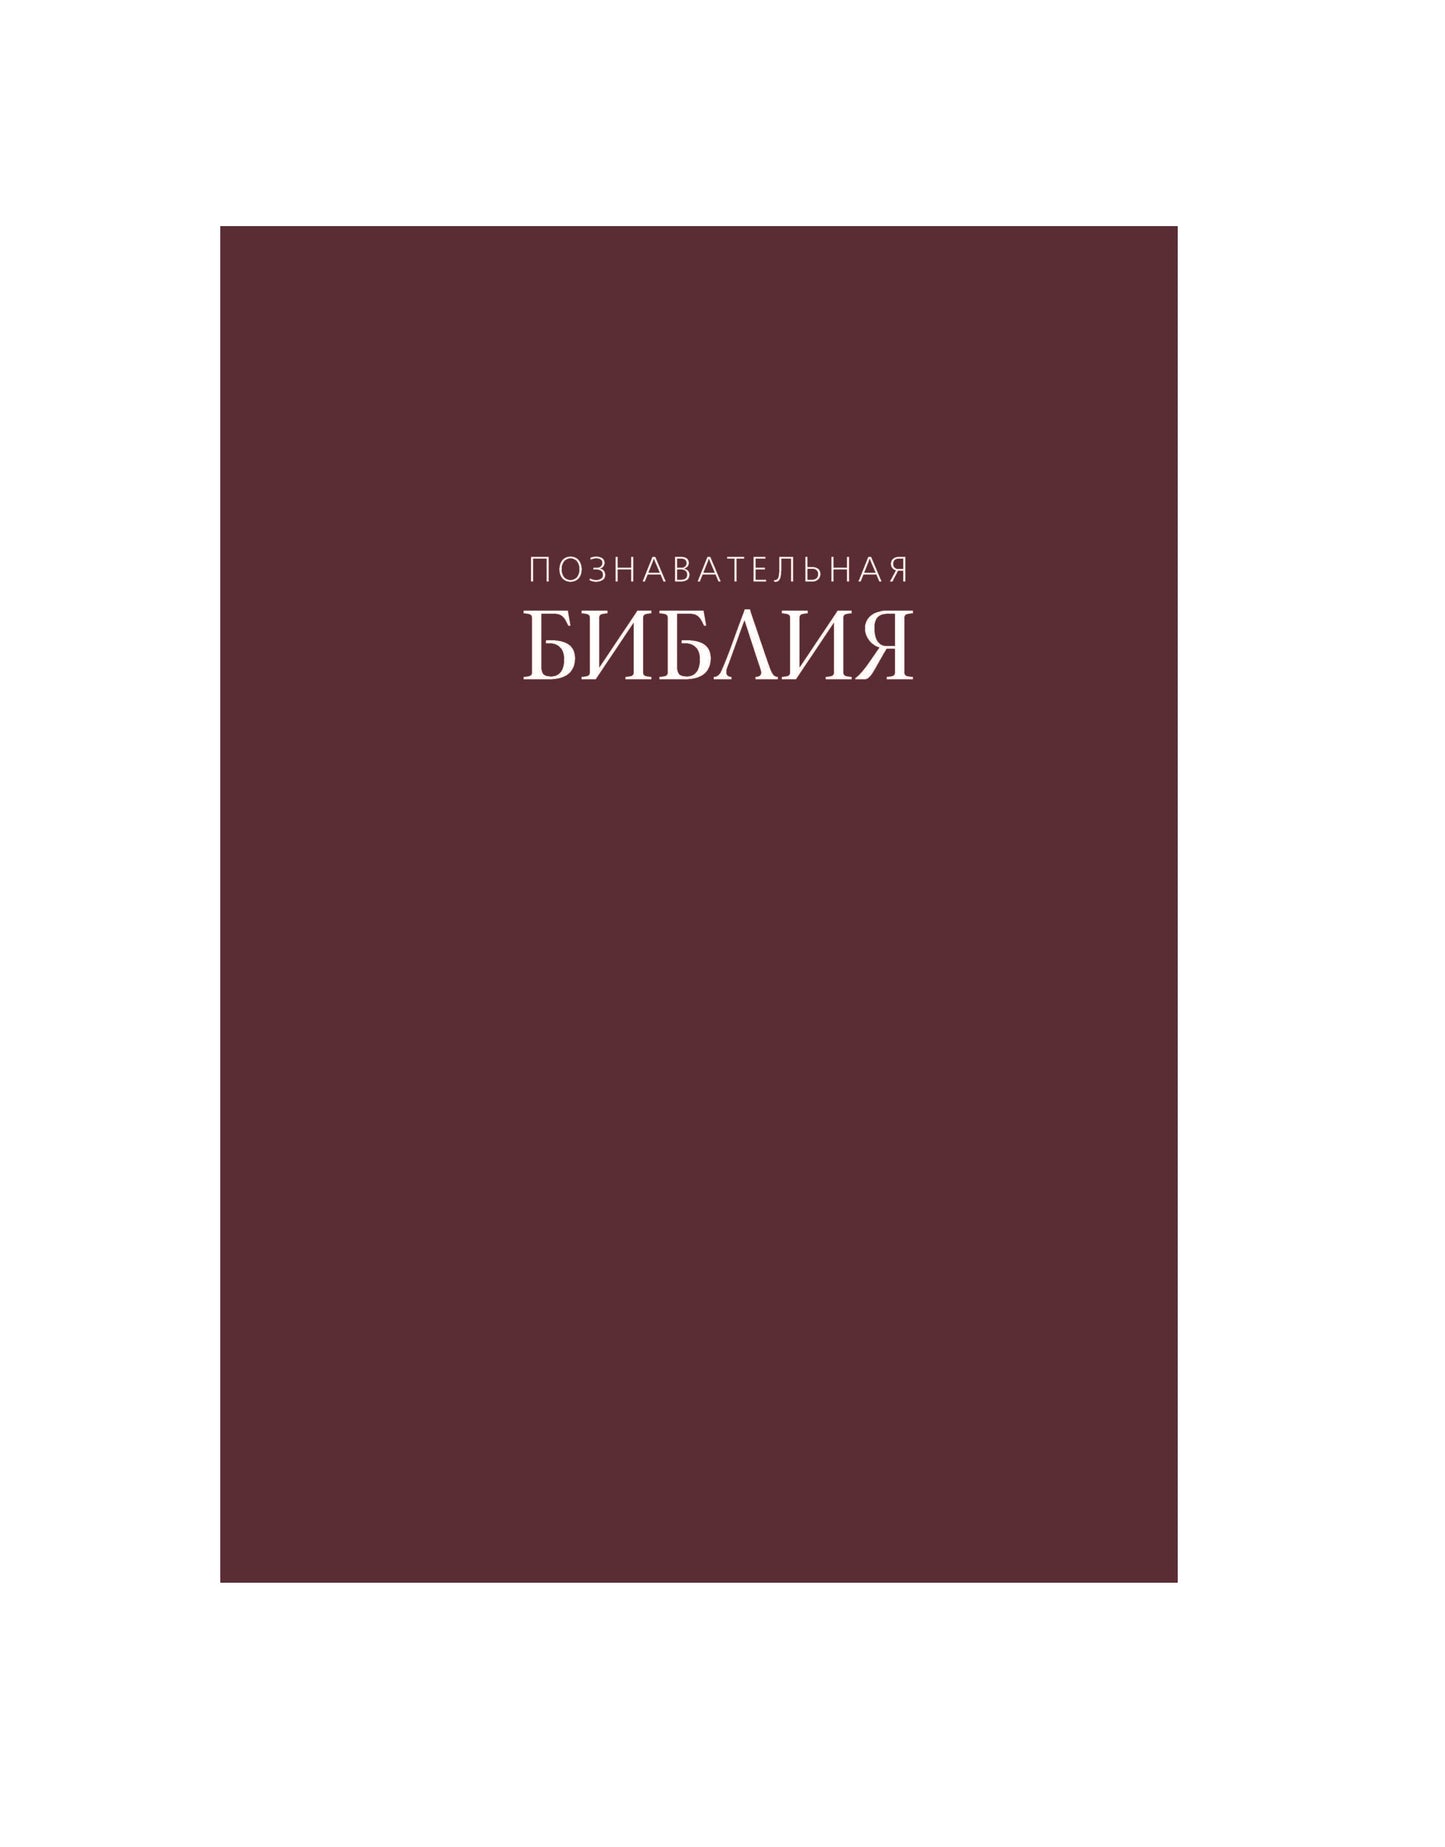 Biblia rusa - Impresión bajo demanda